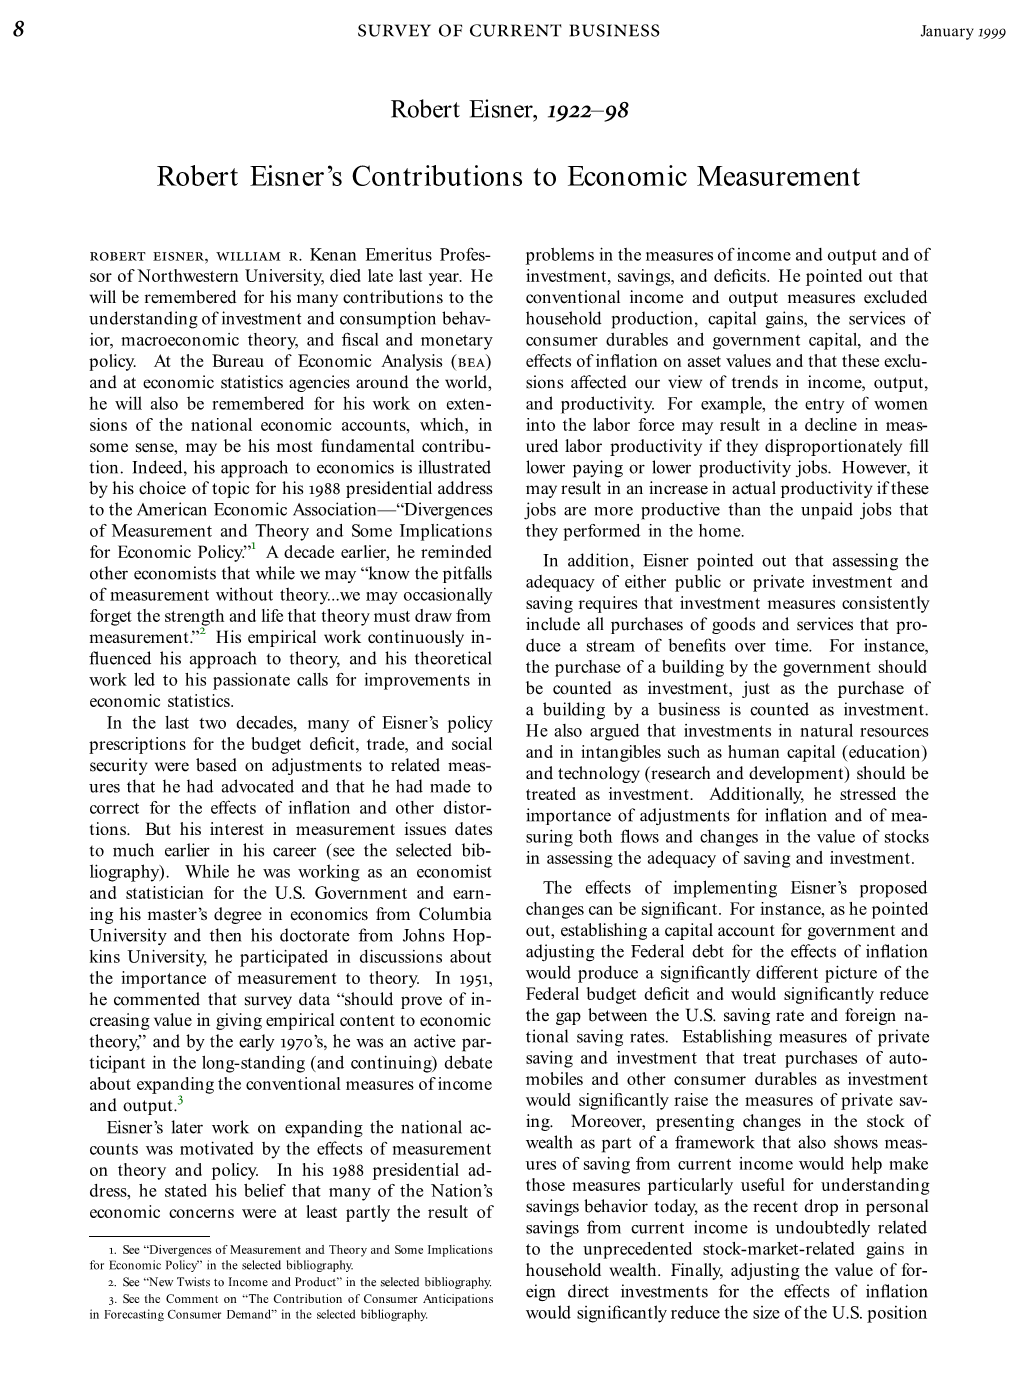 Robert Eisner's Contributions to Economic Measurement, January 1999